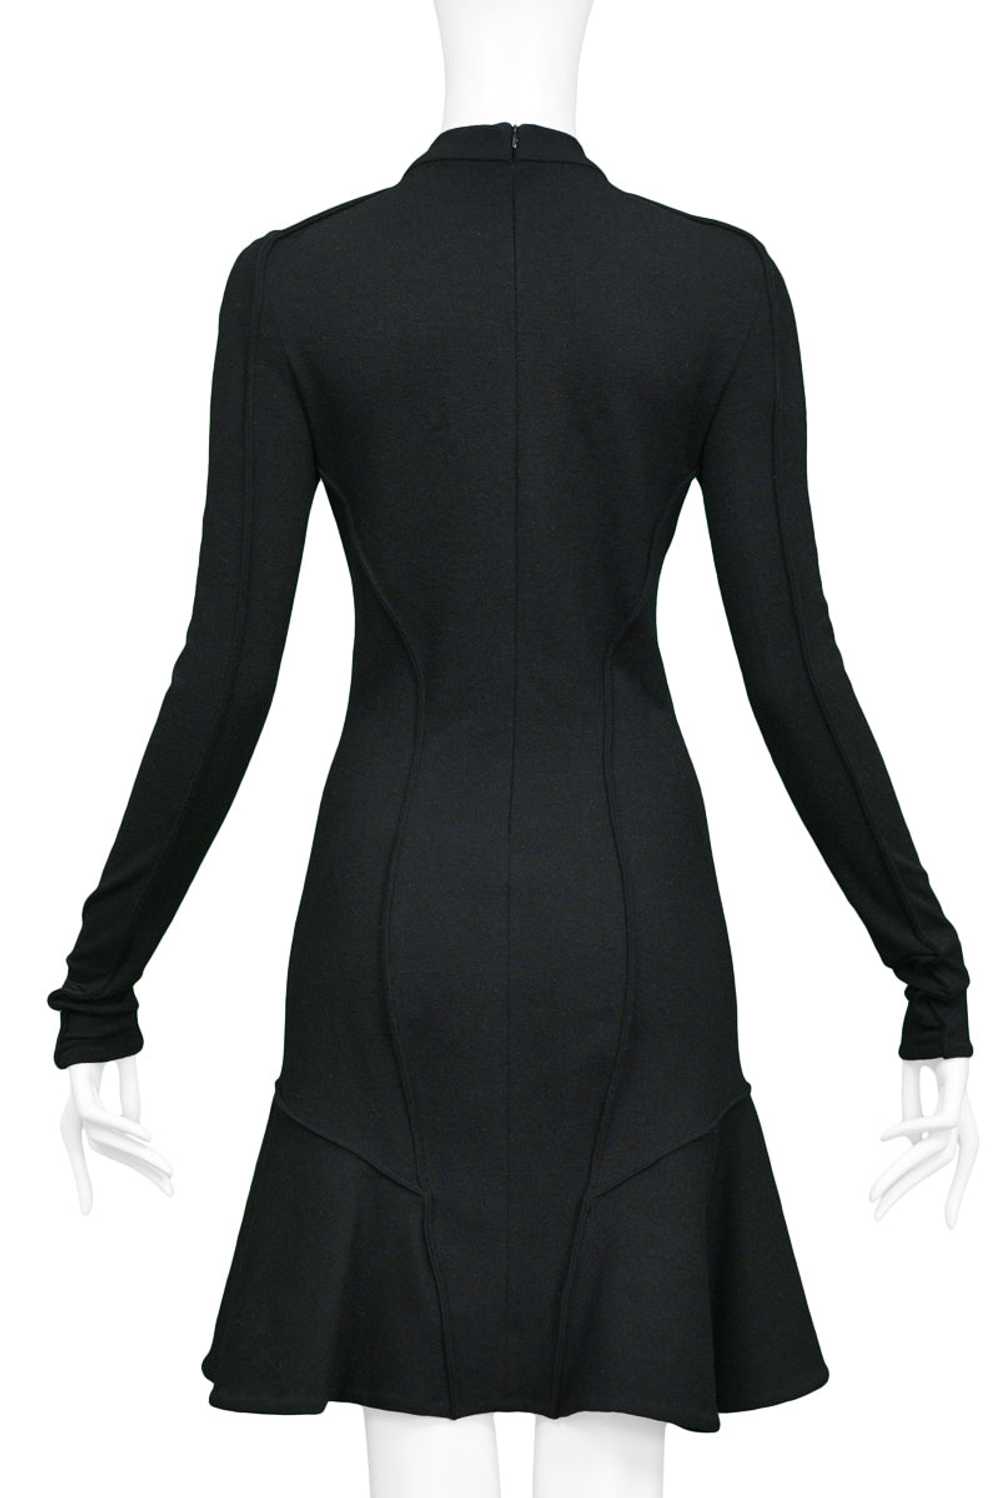 BALENCIAGA BY GHESQUIERE BLACK SCUBA DRESS WITH F… - image 4